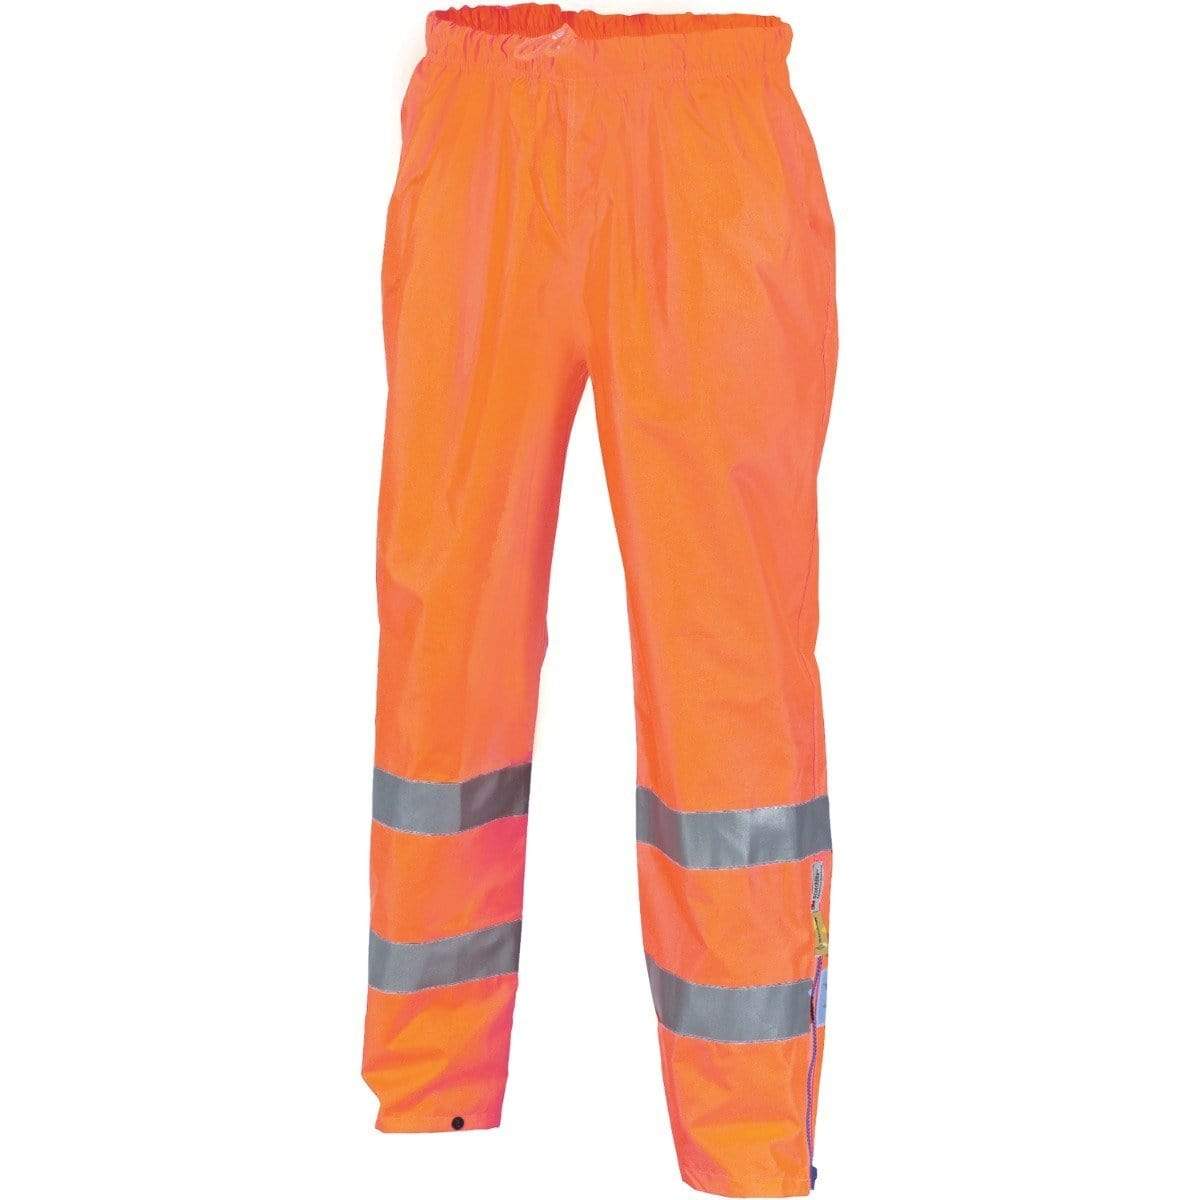 Dnc Workwear Hi-vis D/n Breathable Rain Pants With 3m Reflective Tape - 3872 Work Wear DNC Workwear Orange S 